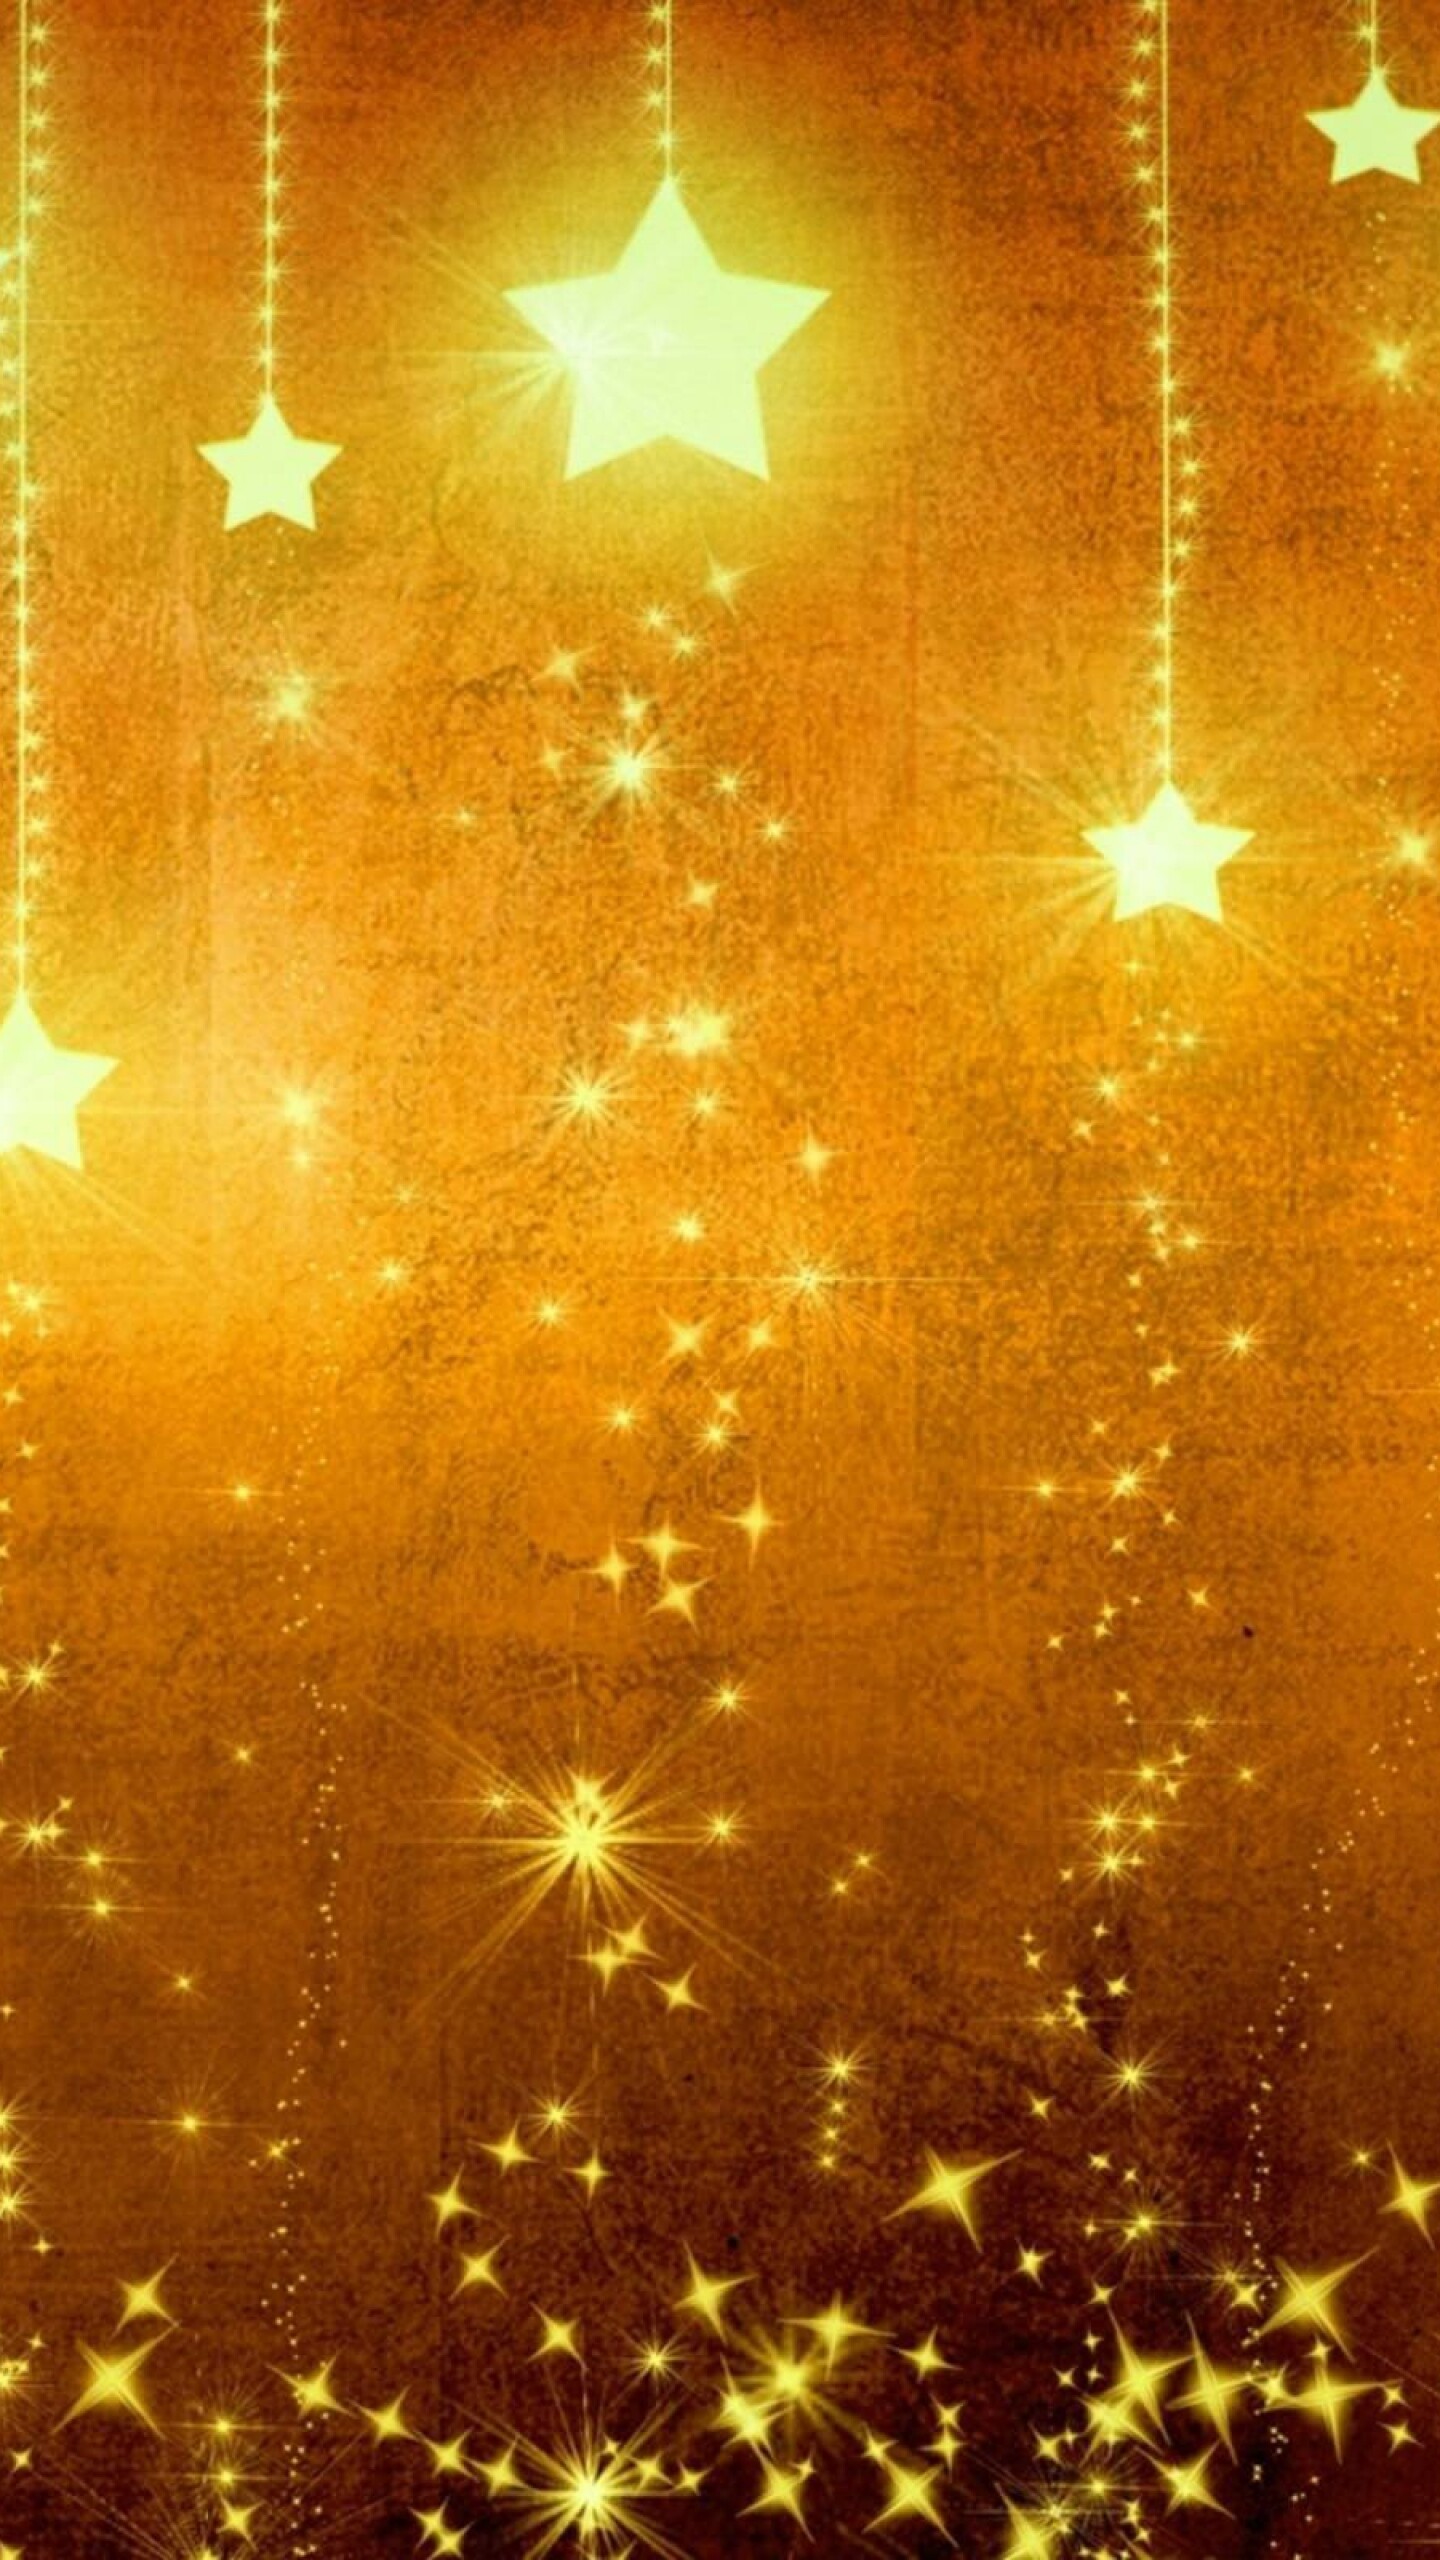 Gold Star: Shining stars, Light bulb decor, Warm white blurry lighting, Christmas decoration. 1440x2560 HD Wallpaper.